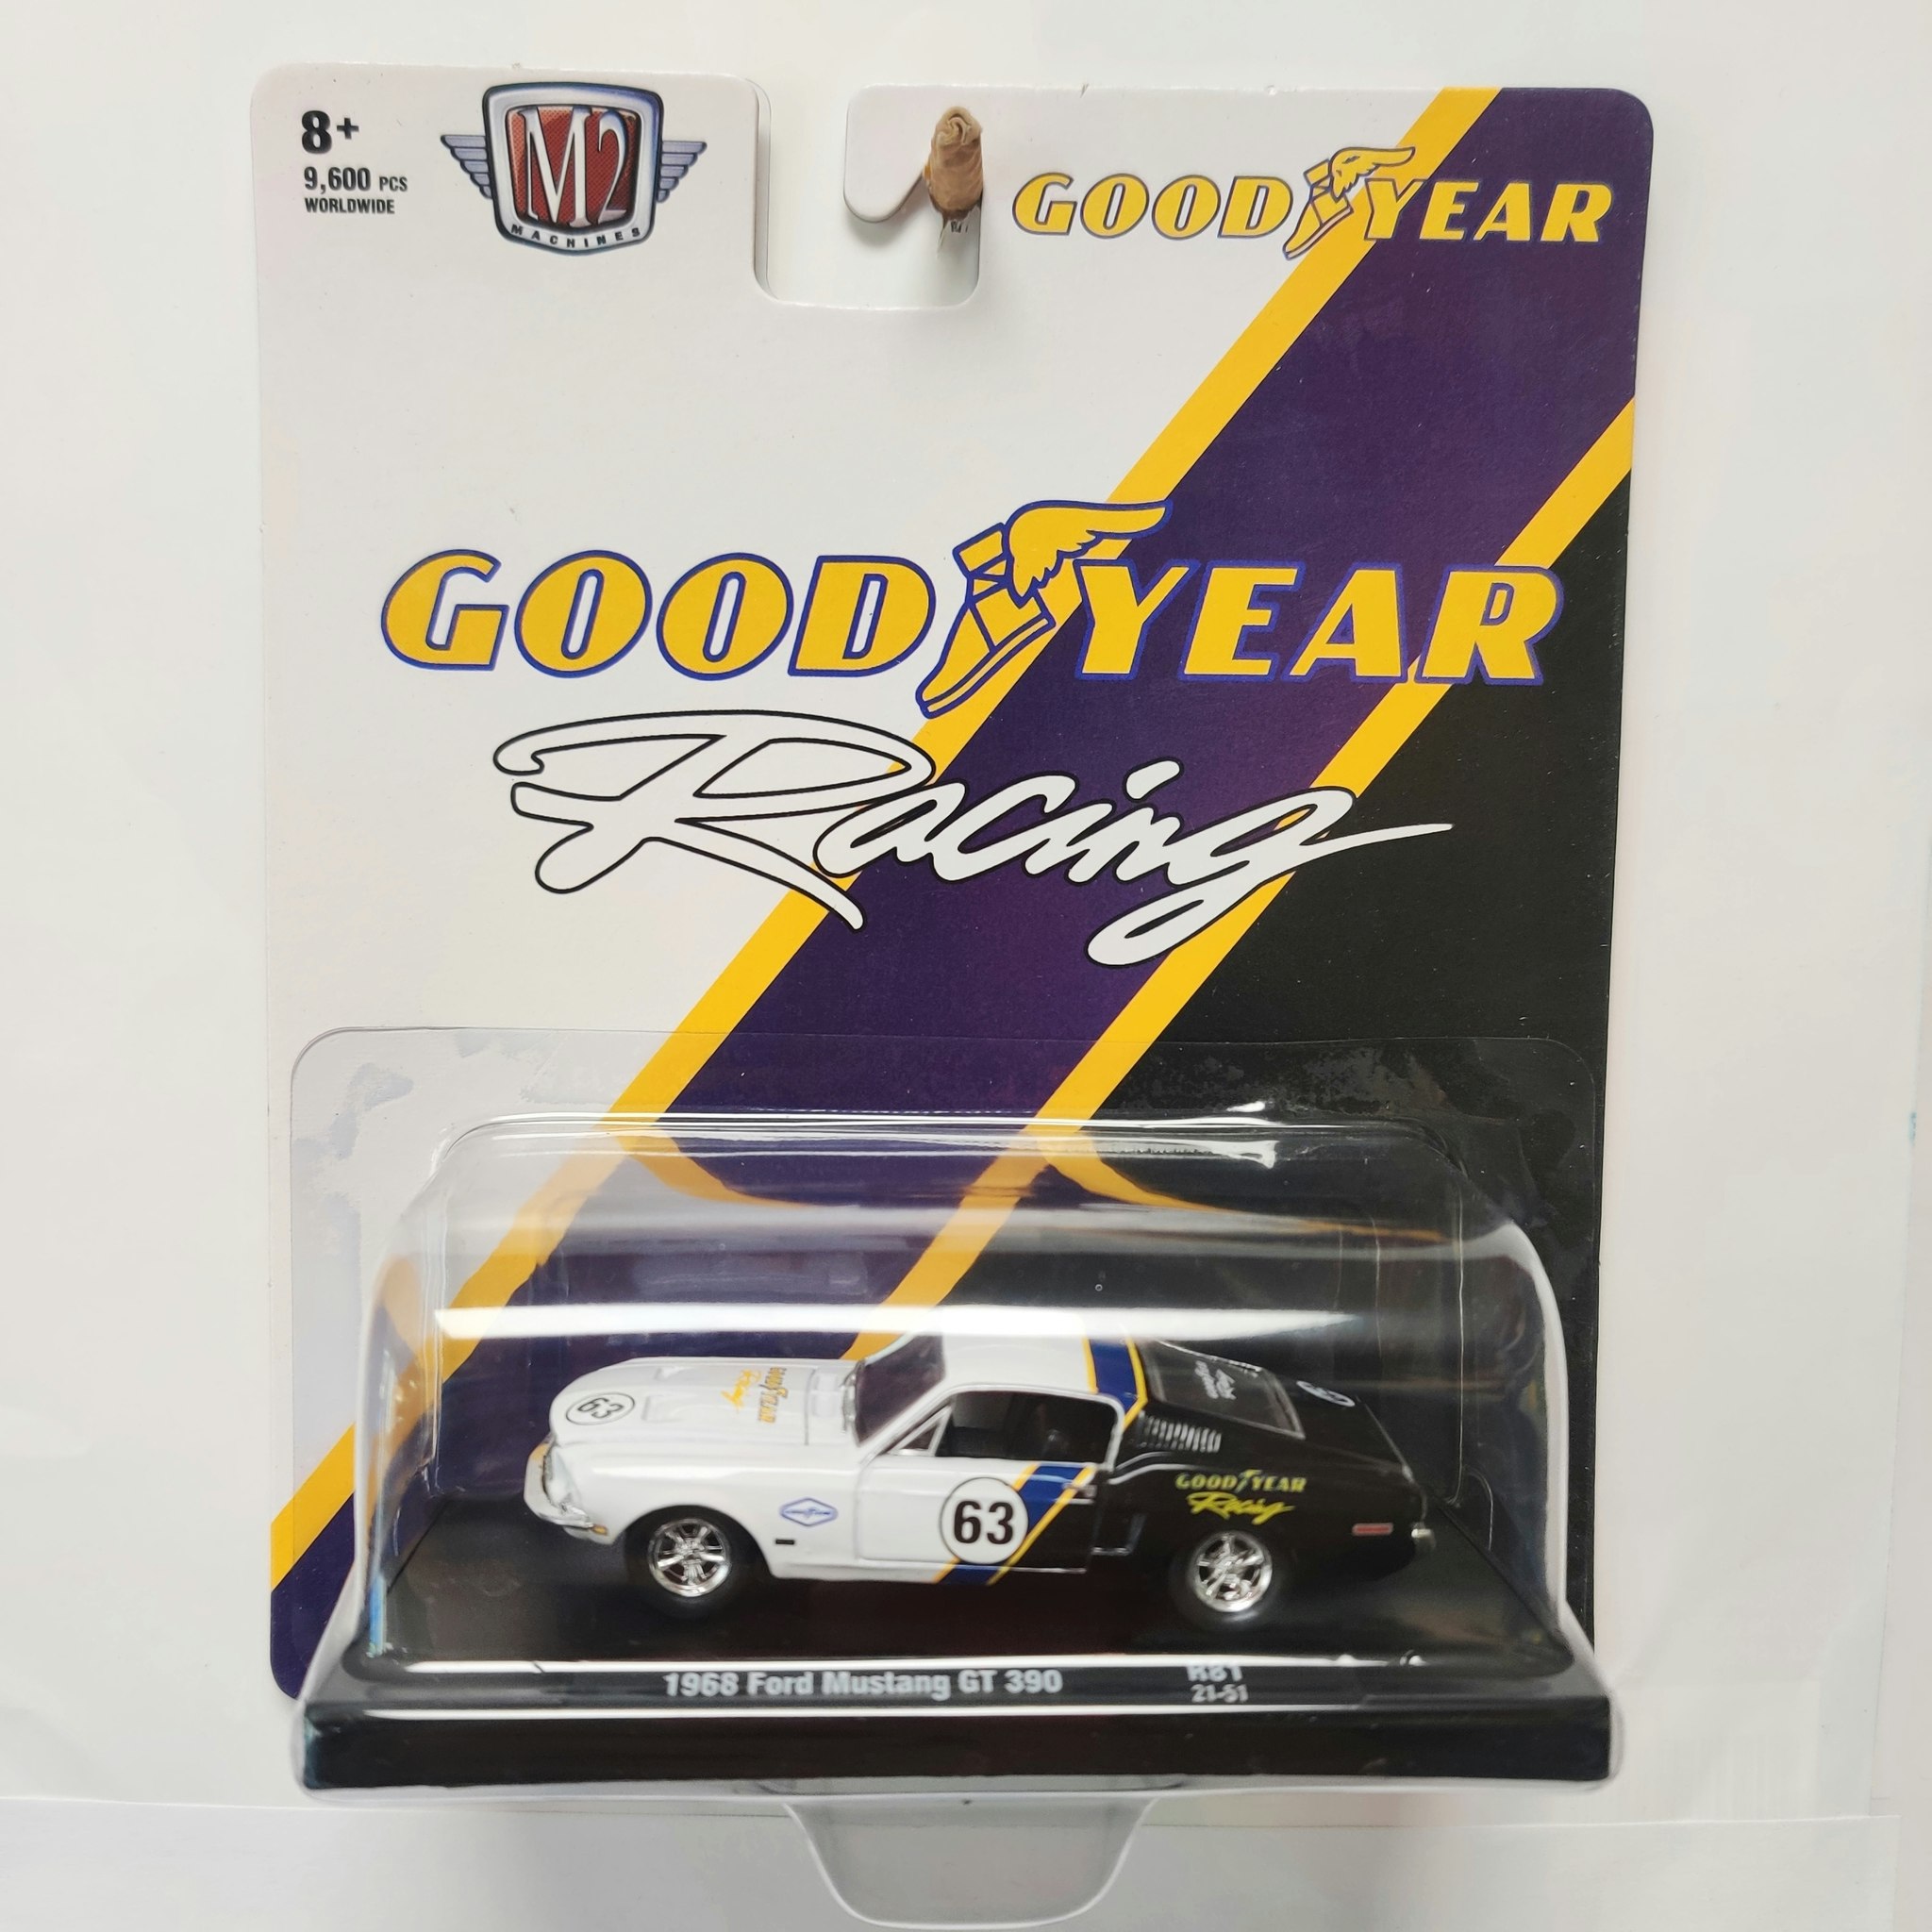 Skala 1/64 Ford Mustang GT 390 68' "Goodyear Racing" fr M2